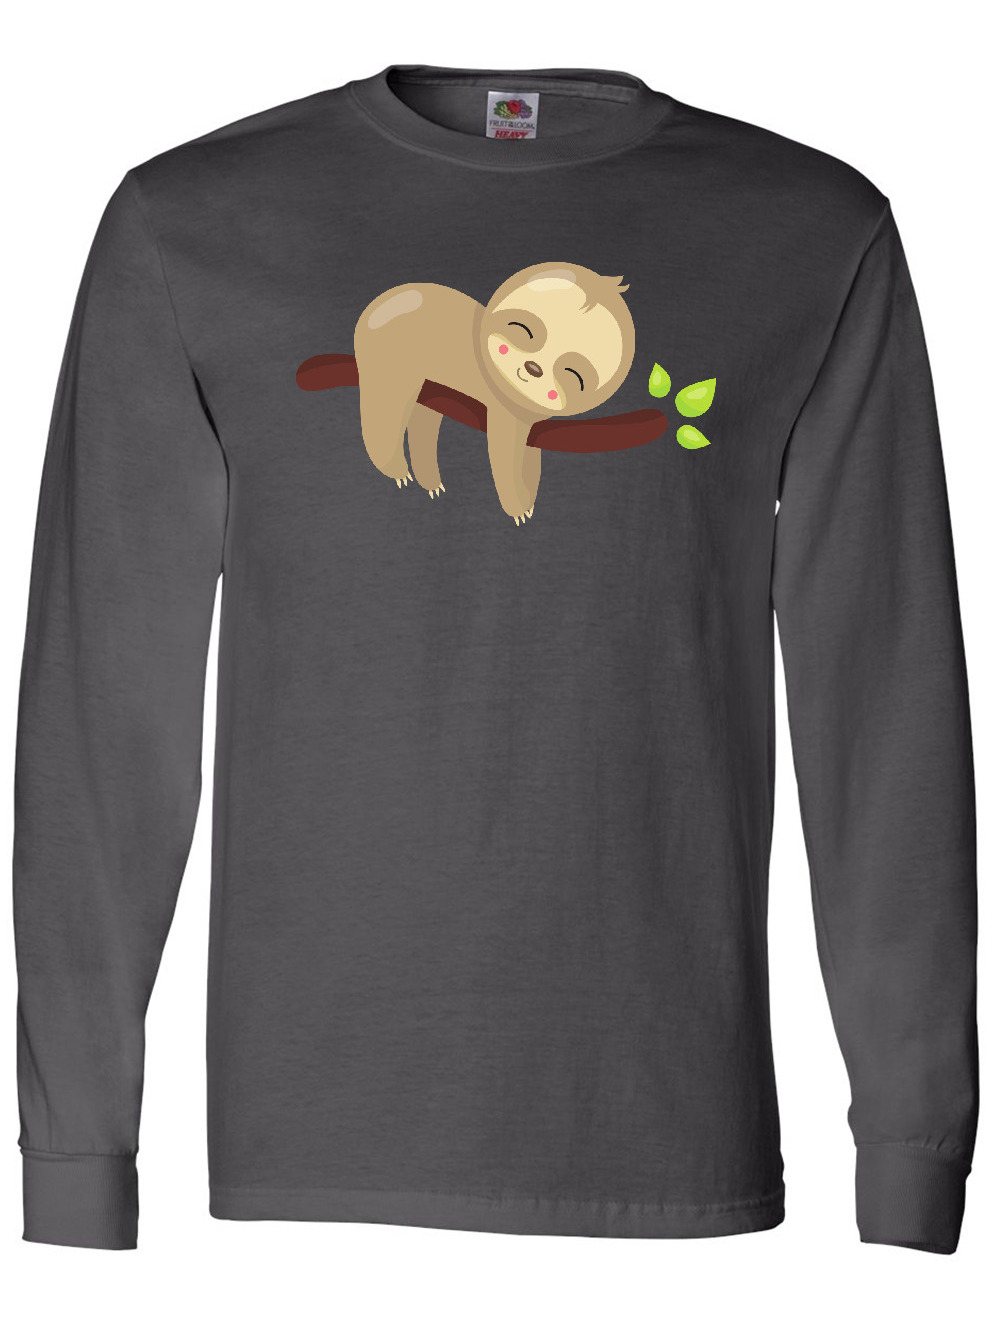 Inktastic Cute Sloth, Baby Sloth, Lazy Sloth, Sleeping Sloth Long Sleeve T-Shirt - image 1 of 4